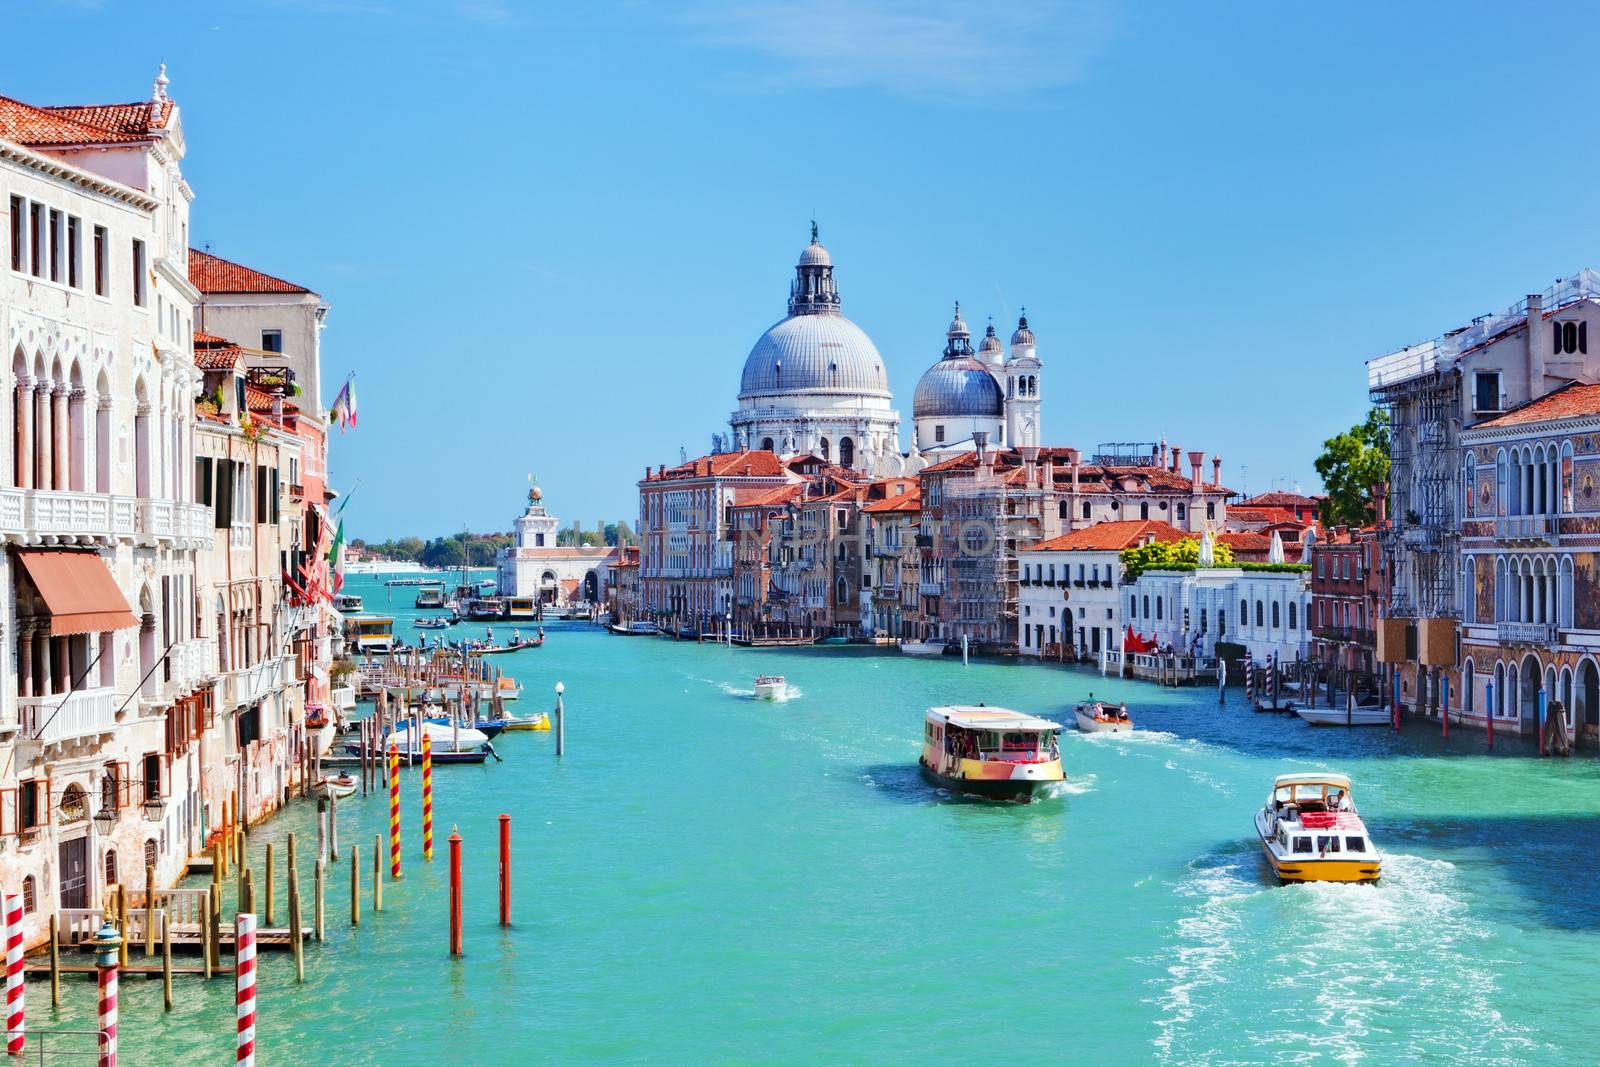 Venice, Italy. Grand Canal and Basilica Santa Maria della Salute by photocreo